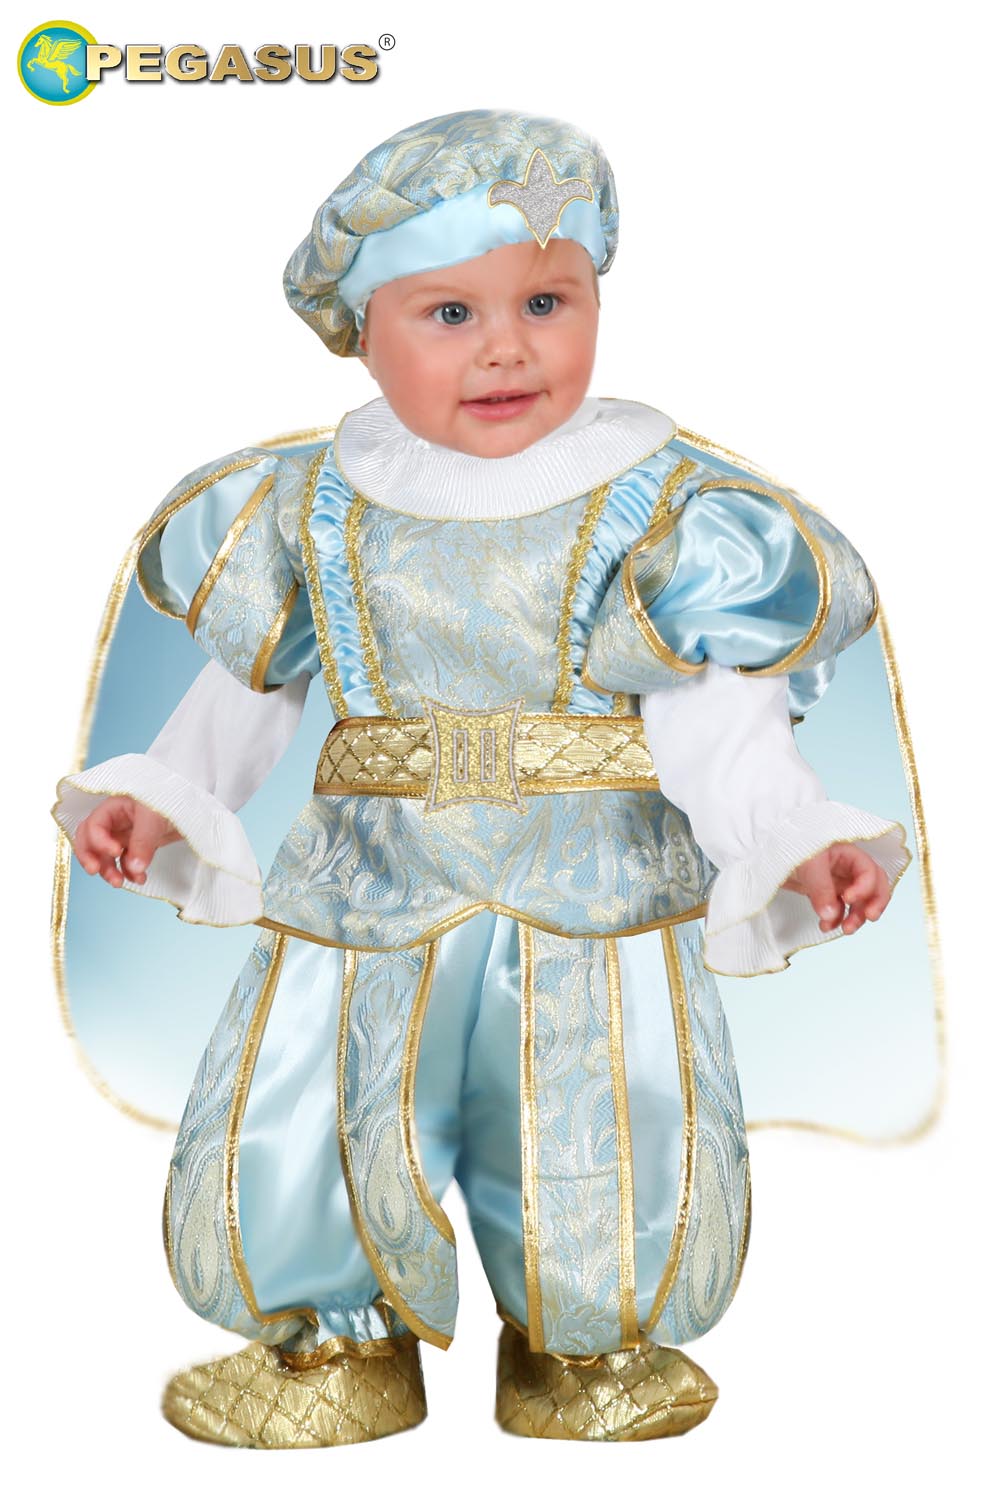 👶 Vestiti carnevale neonati. Costumi carnevale bimbi 2 anni e